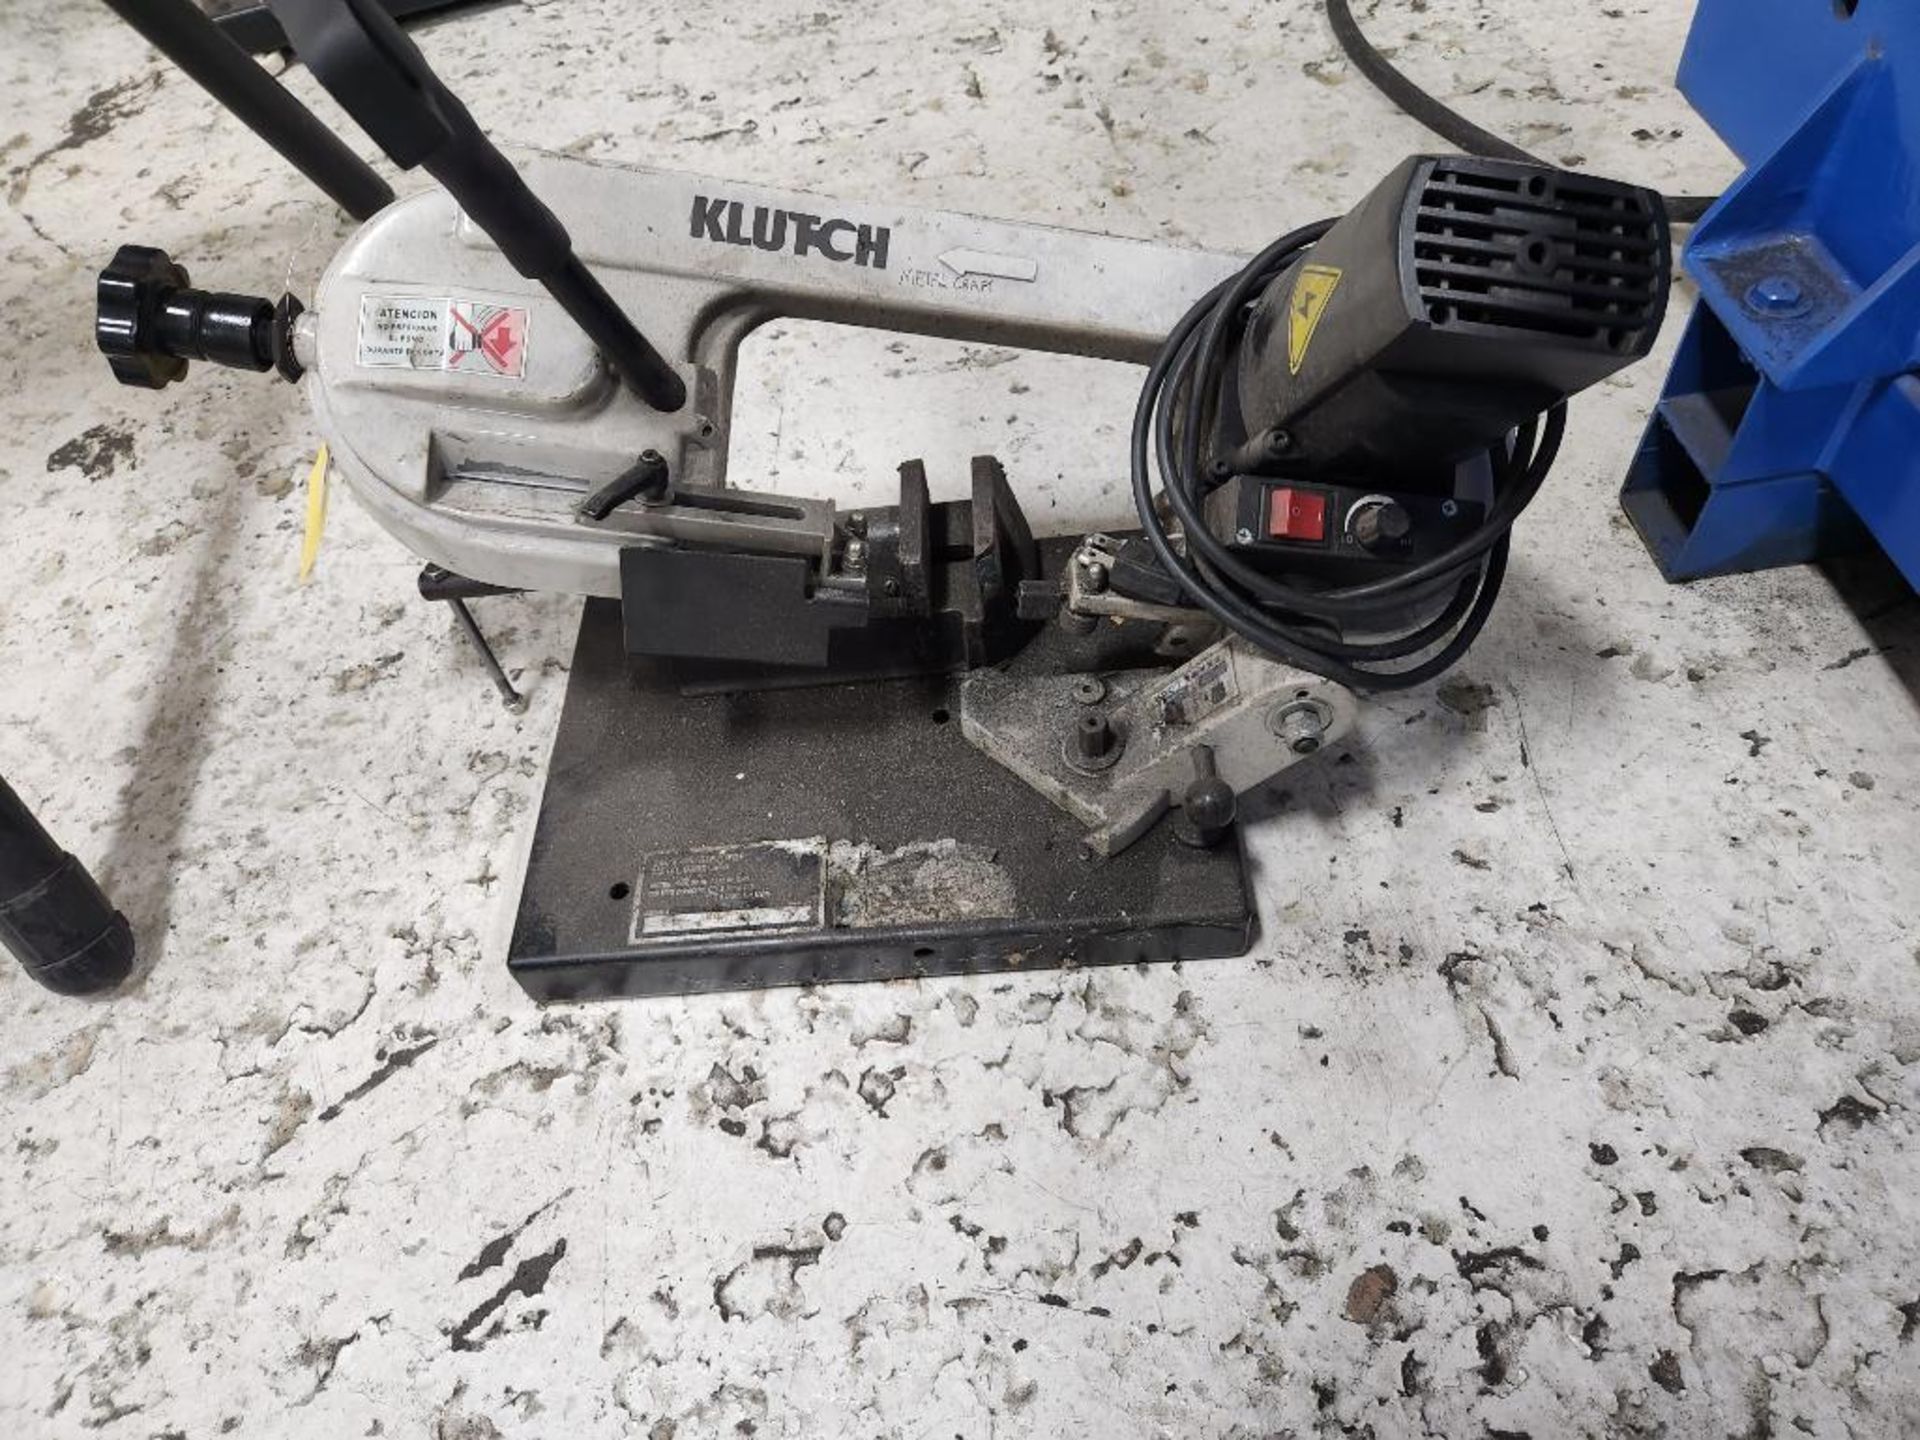 Klutch Bench Top Band Saw, 52" Blade, 3" - 4" Cut Capacity, Model 49466, S/N A18012029